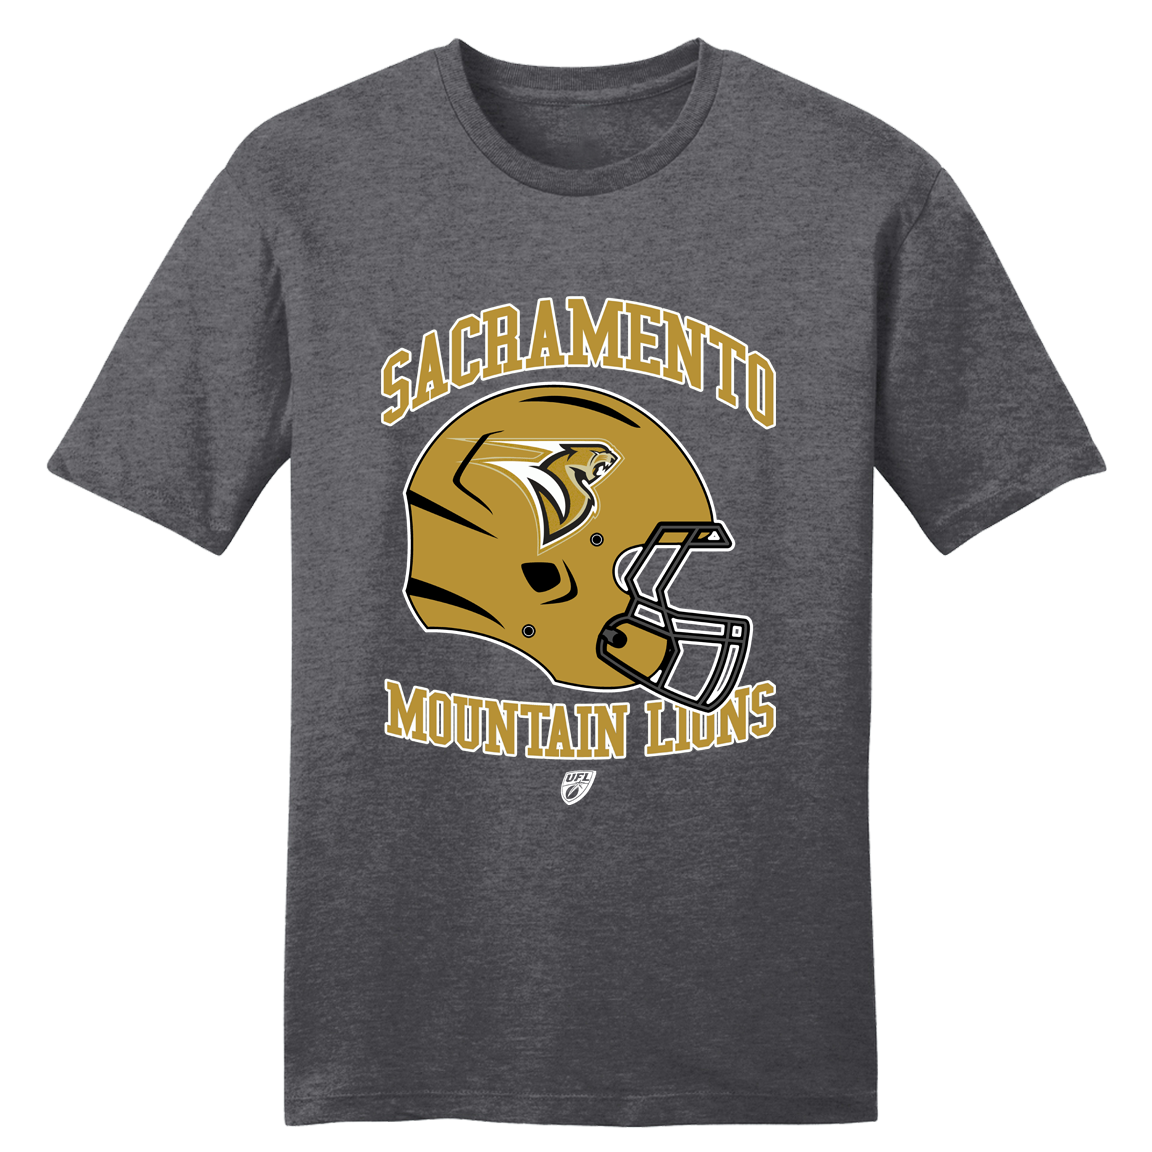 Sacramento Mountain Lions tee